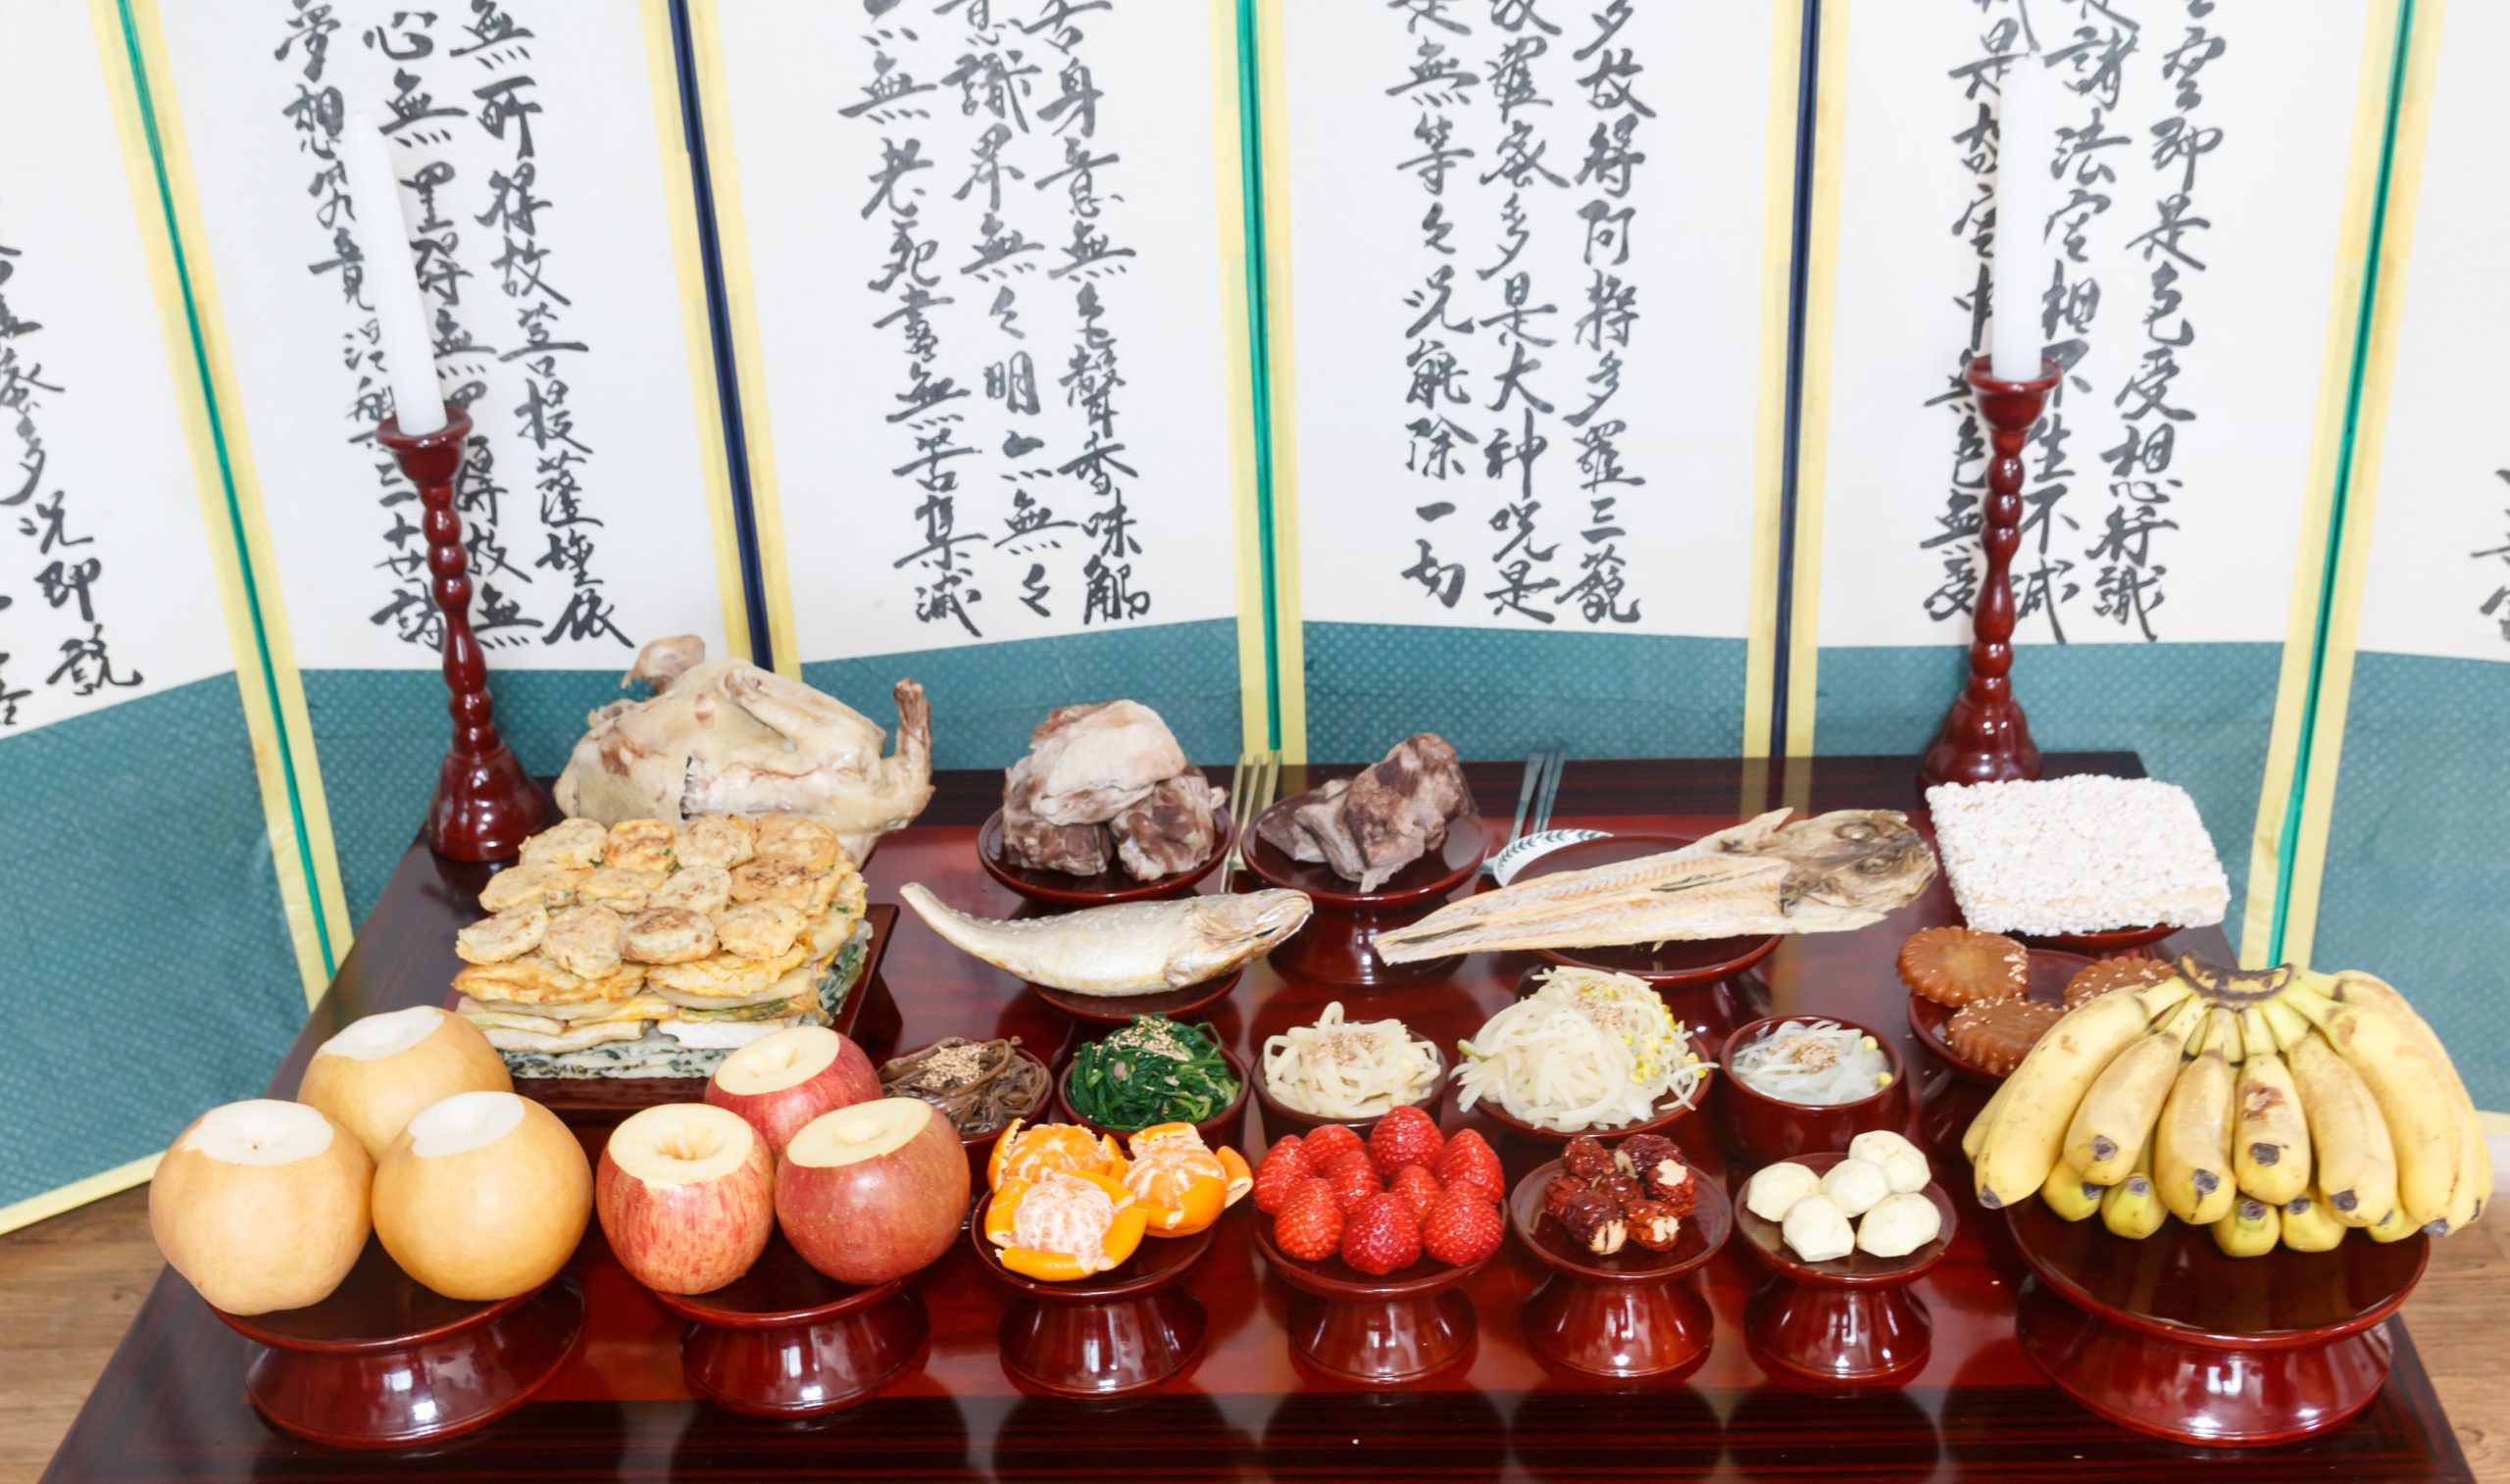 Korean table for ancestral rites